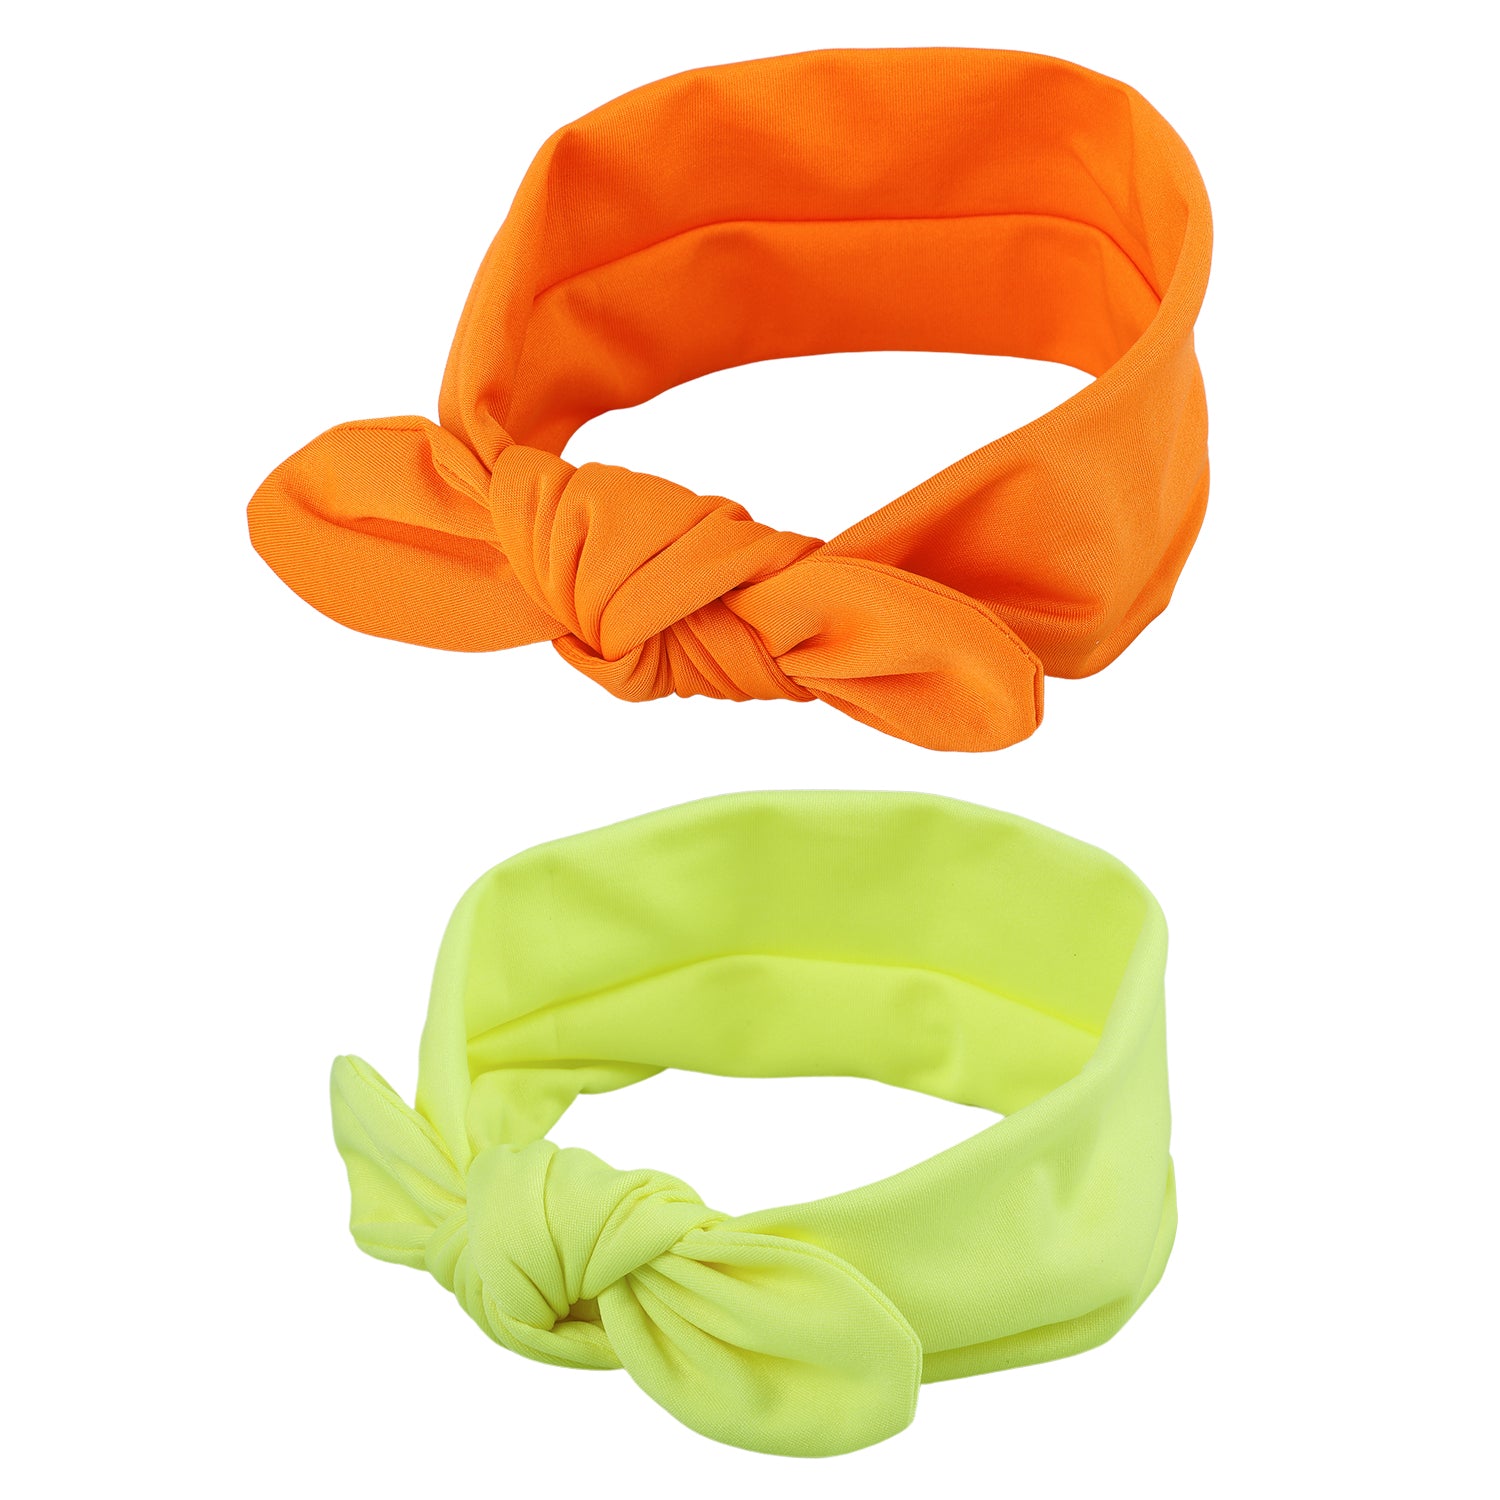 Bow Knot Headbands Set of 2 - Yellow, Orange